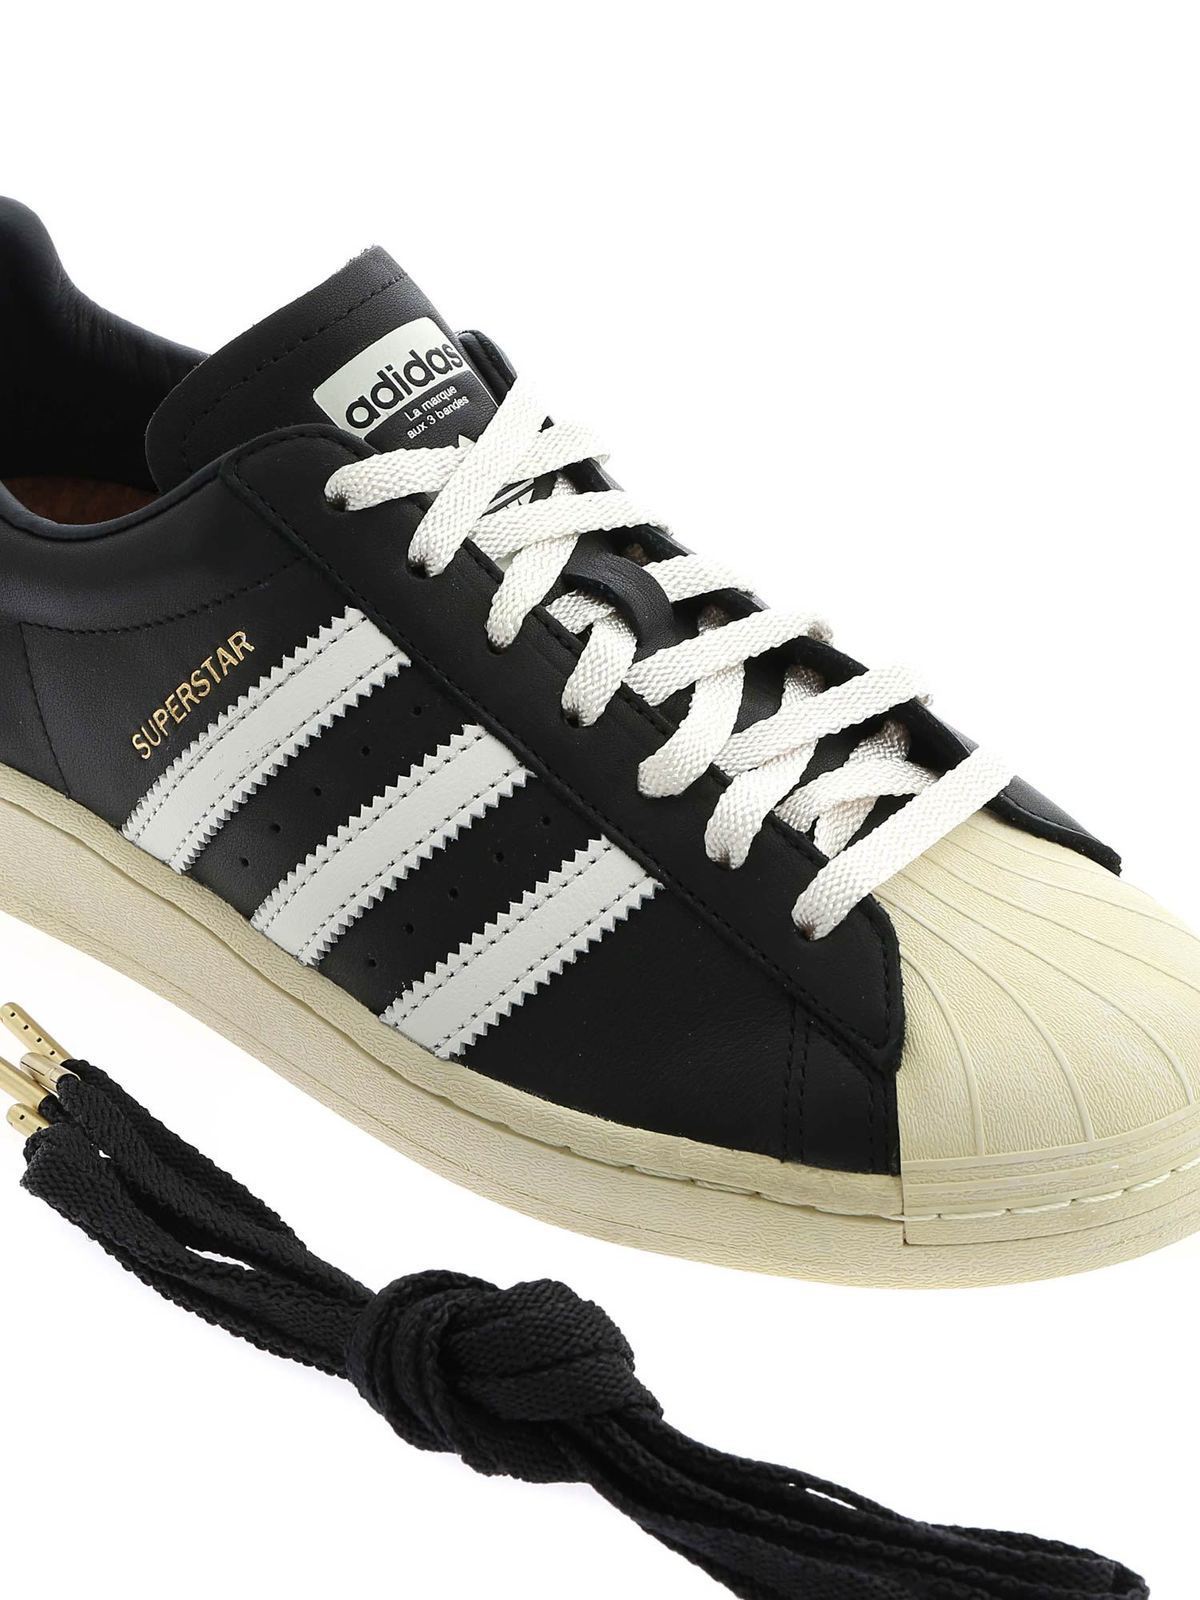 maak het plat Farmacologie Einde Trainers Adidas Originals - Superstar sneakers in black and white - FV2832